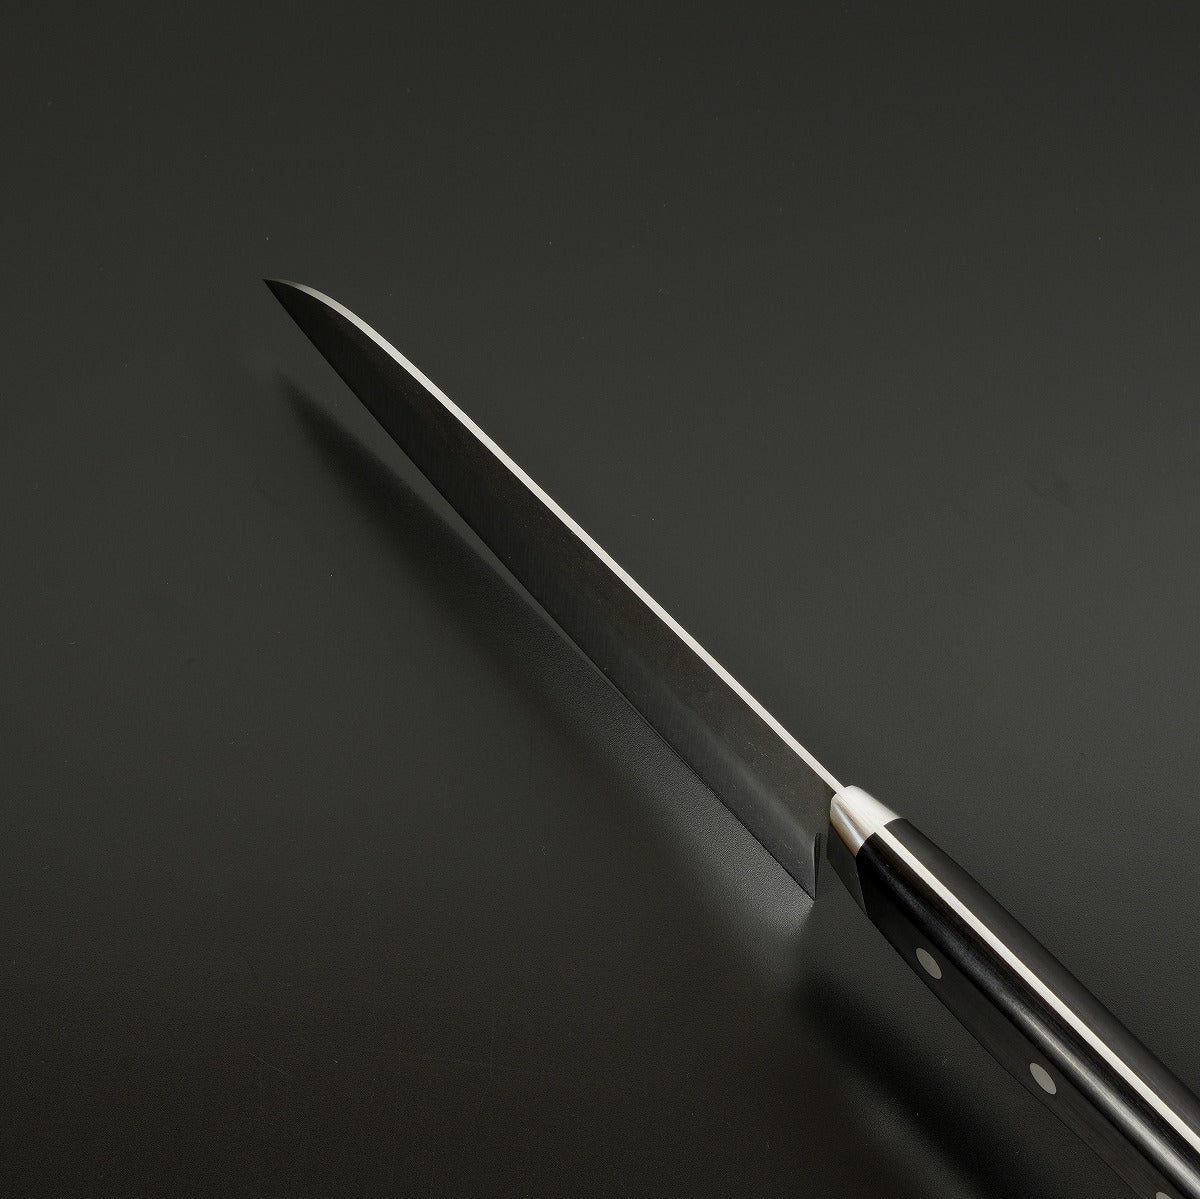 HONMAMON 三德刀 (多用途廚刀) 青紙鋼2號 鎚目模樣, 180mm